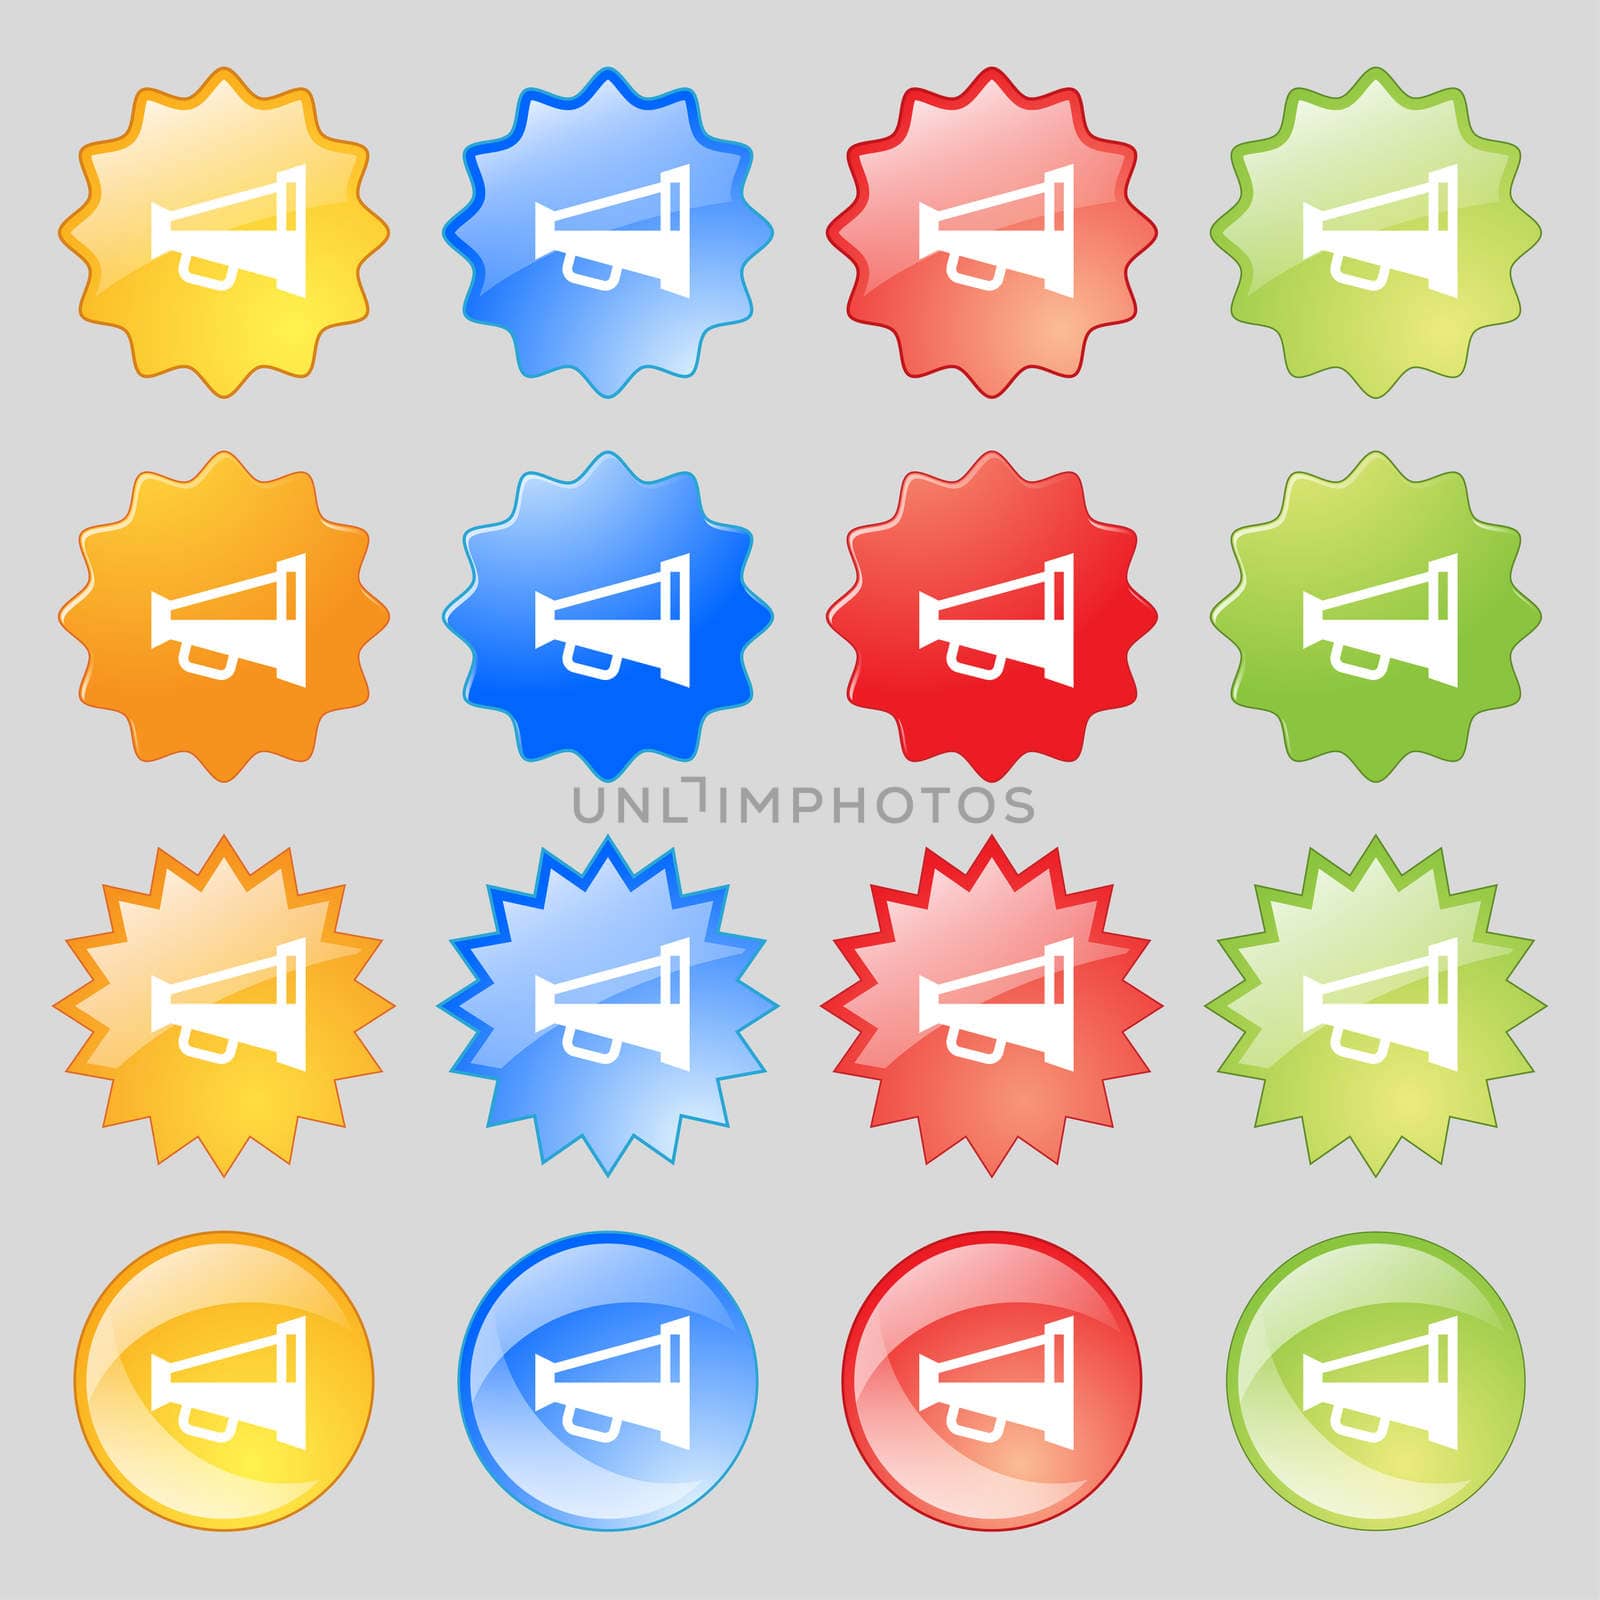 Megaphone soon, Loudspeaker icon sign. Big set of 16 colorful modern buttons for your design. illustration